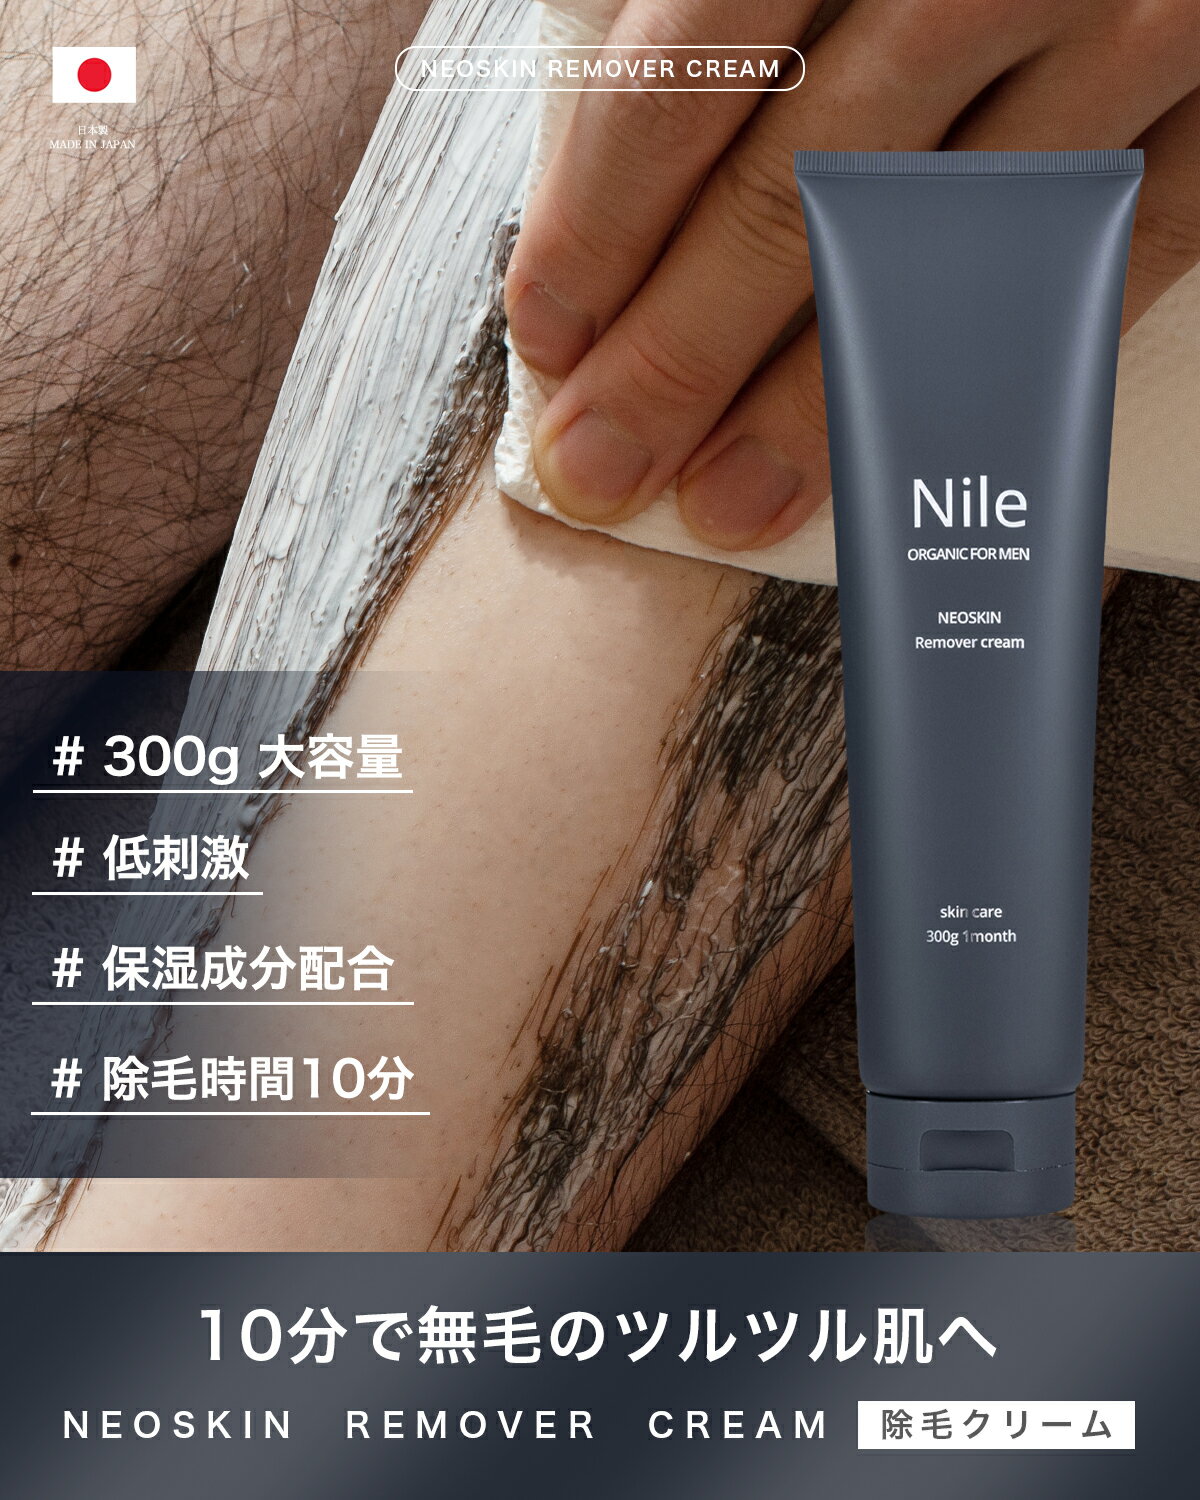 Nile 除毛クリーム メンズ 大容量300g 敏感肌/剛毛リムーバークリーム NEOSKIN 幸せラボ【送料無料】 Nile （ナイル） ボディケア